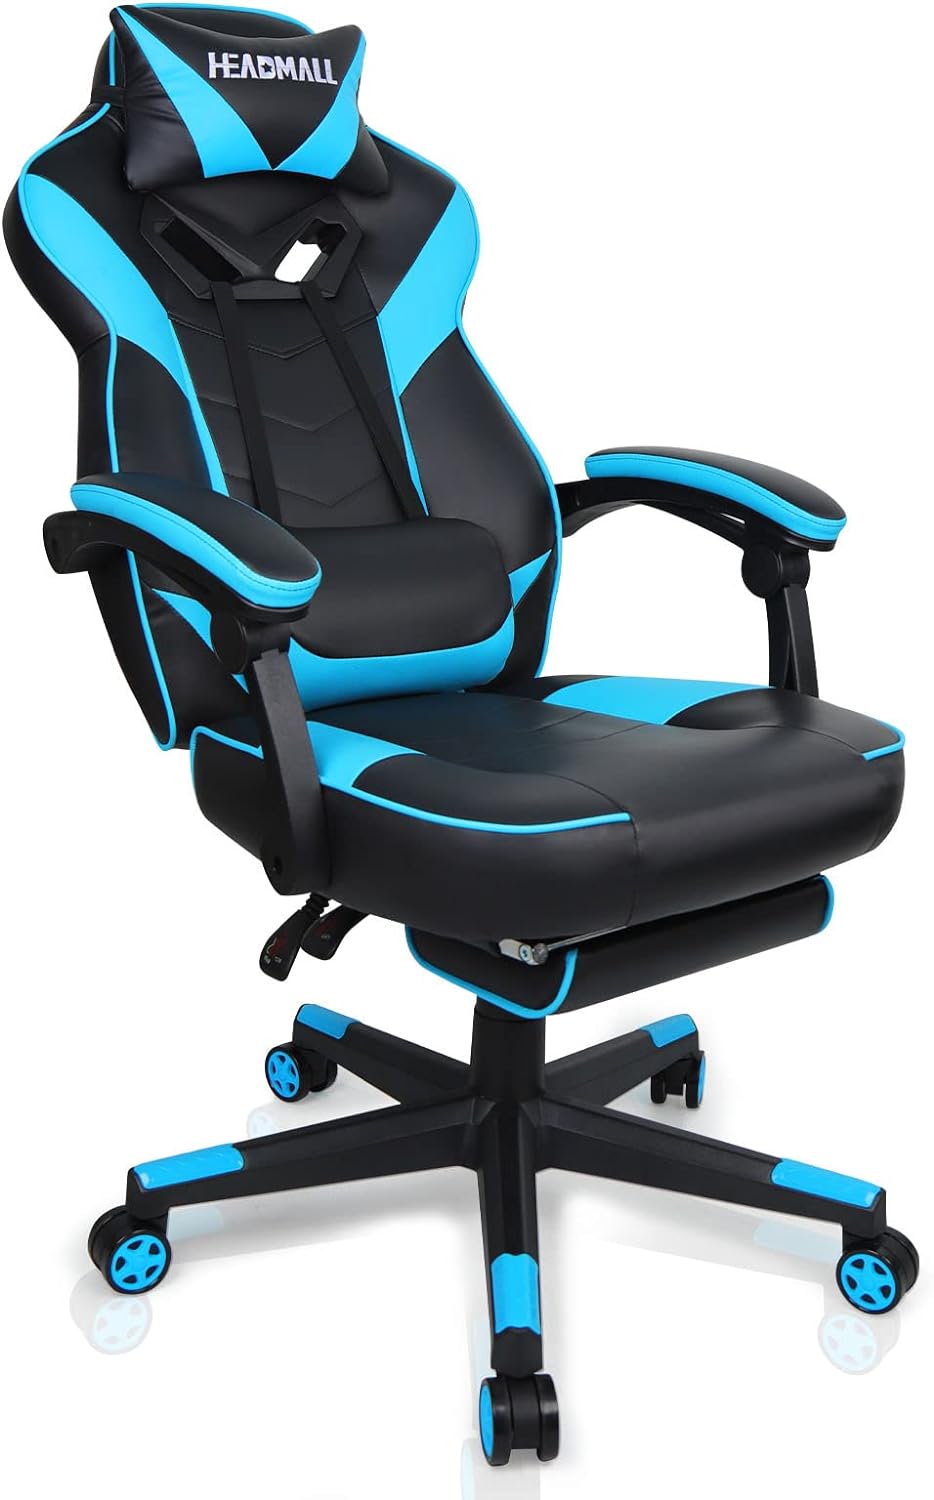 HEADMALL Gaming Chairs